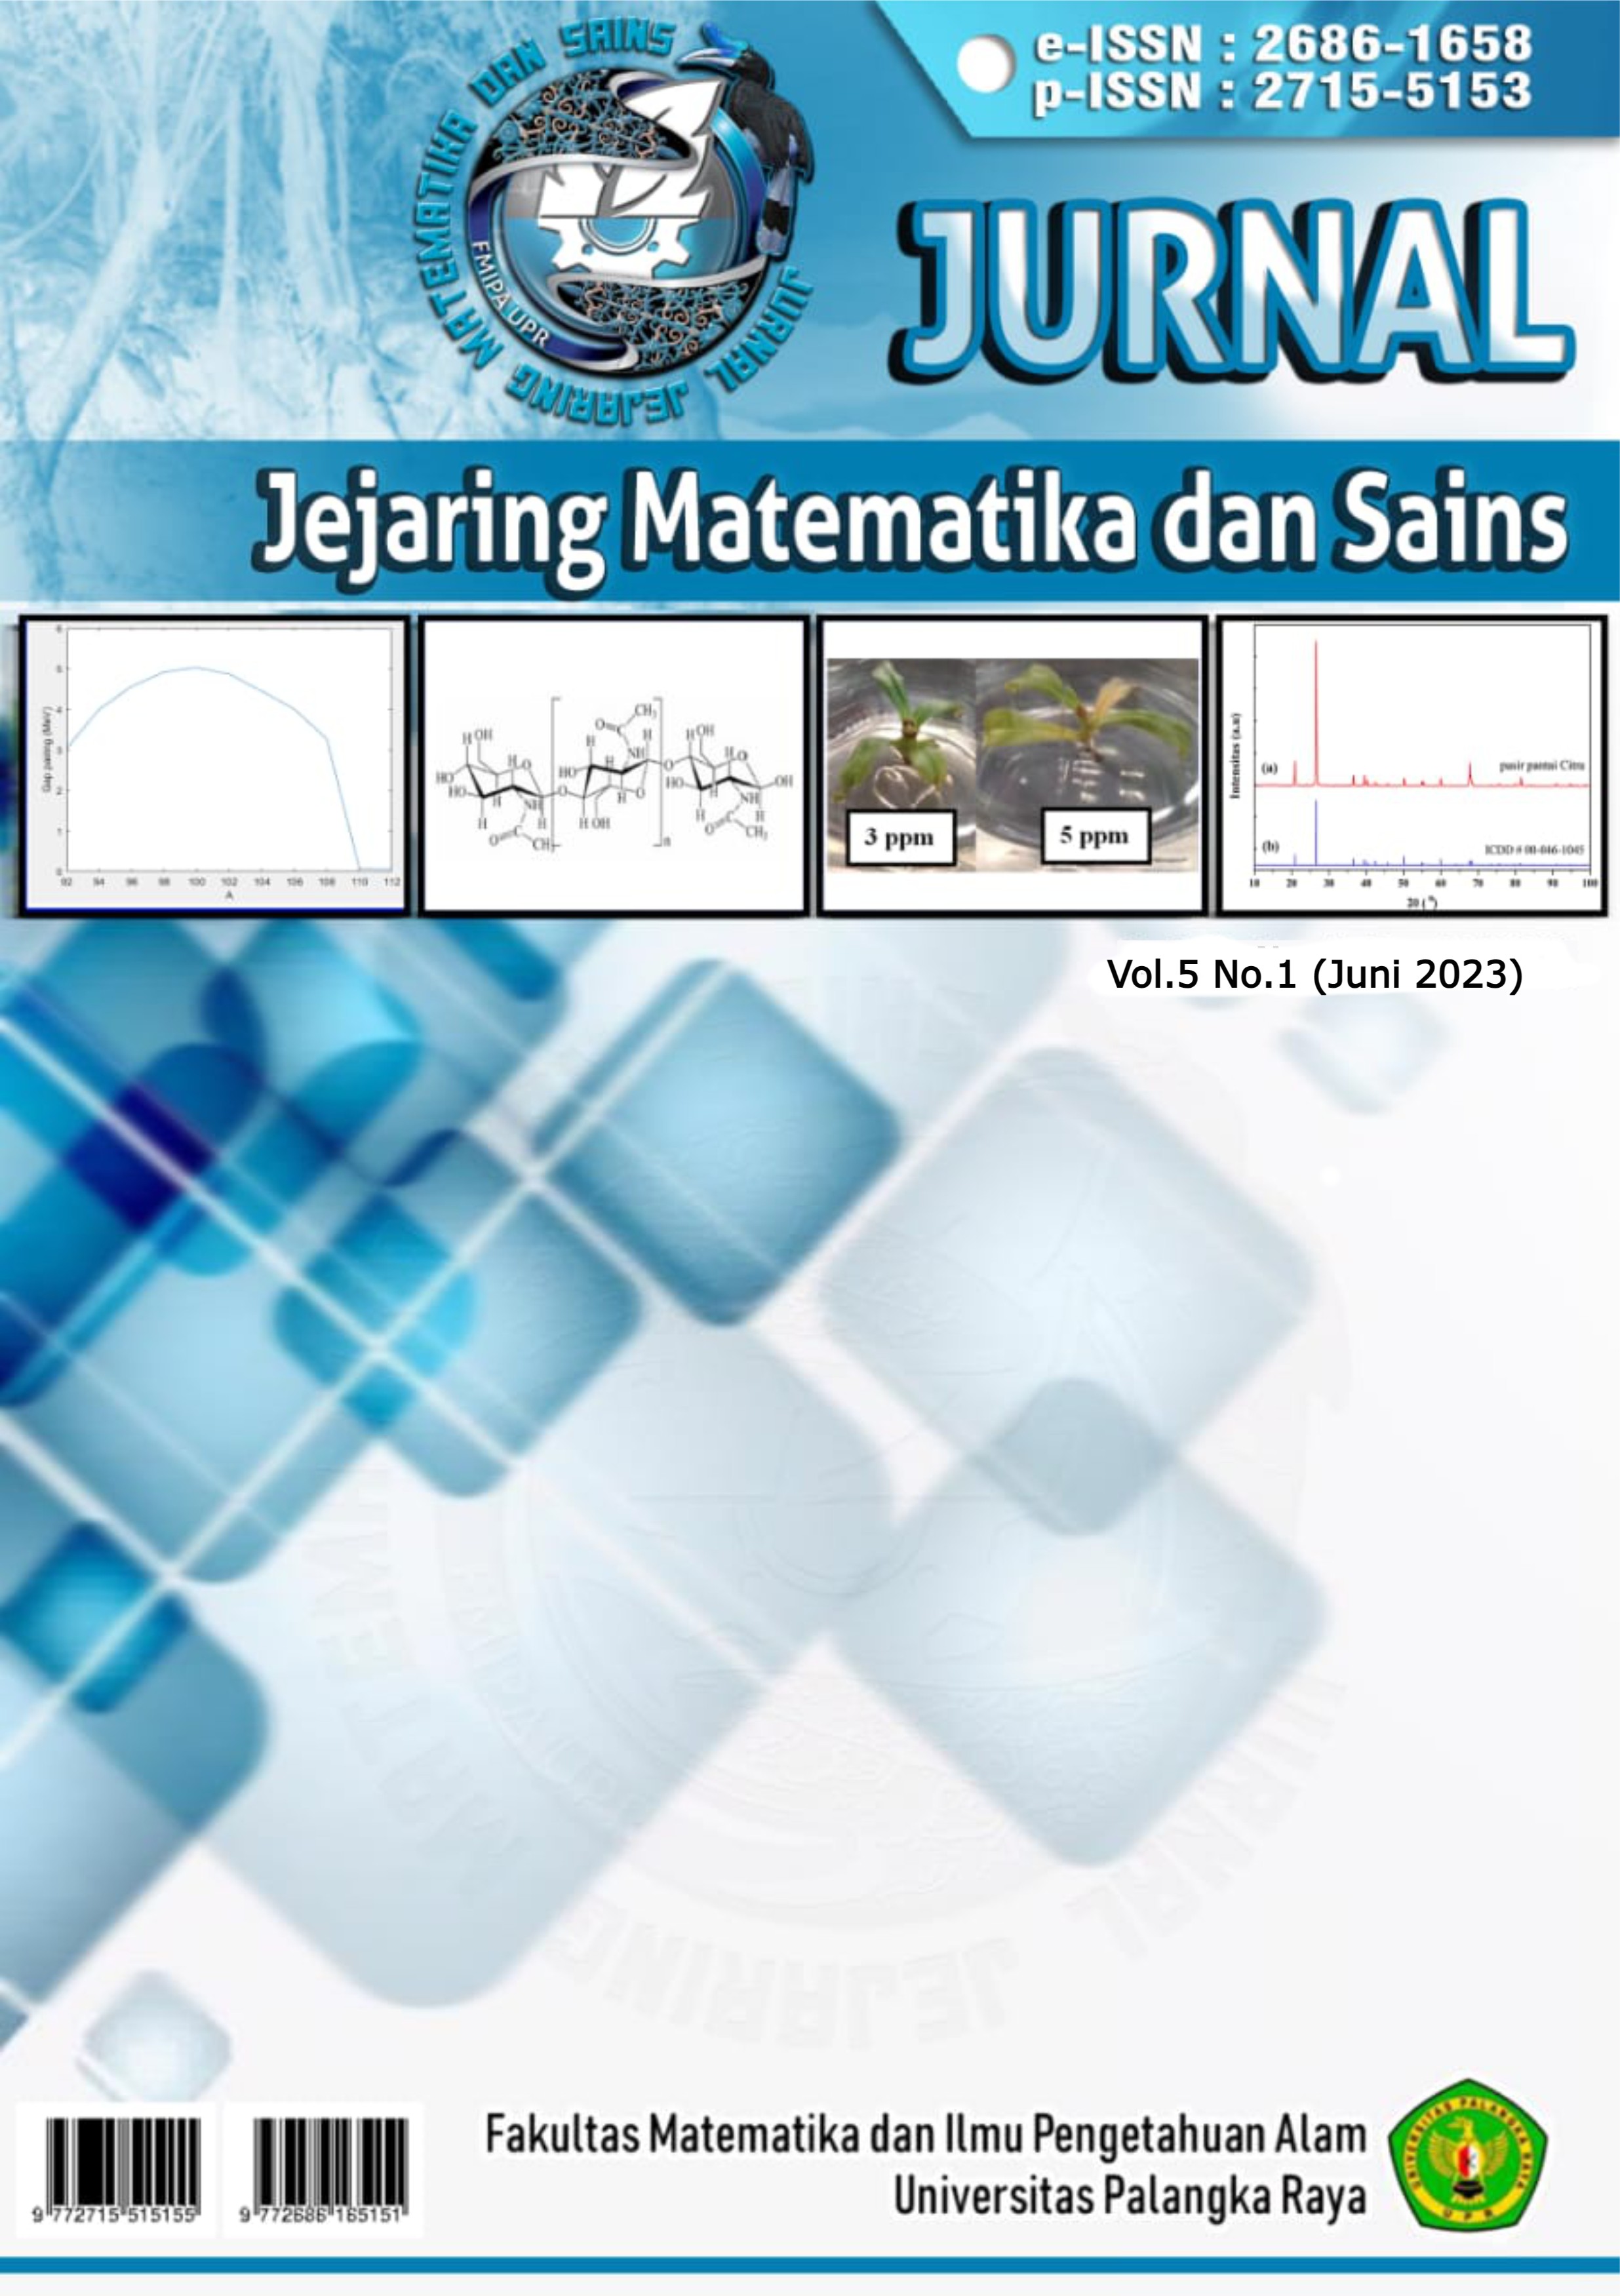 					View Vol. 5 No. 1 (2023): Jurnal Jejaring Matematika dan Sains
				